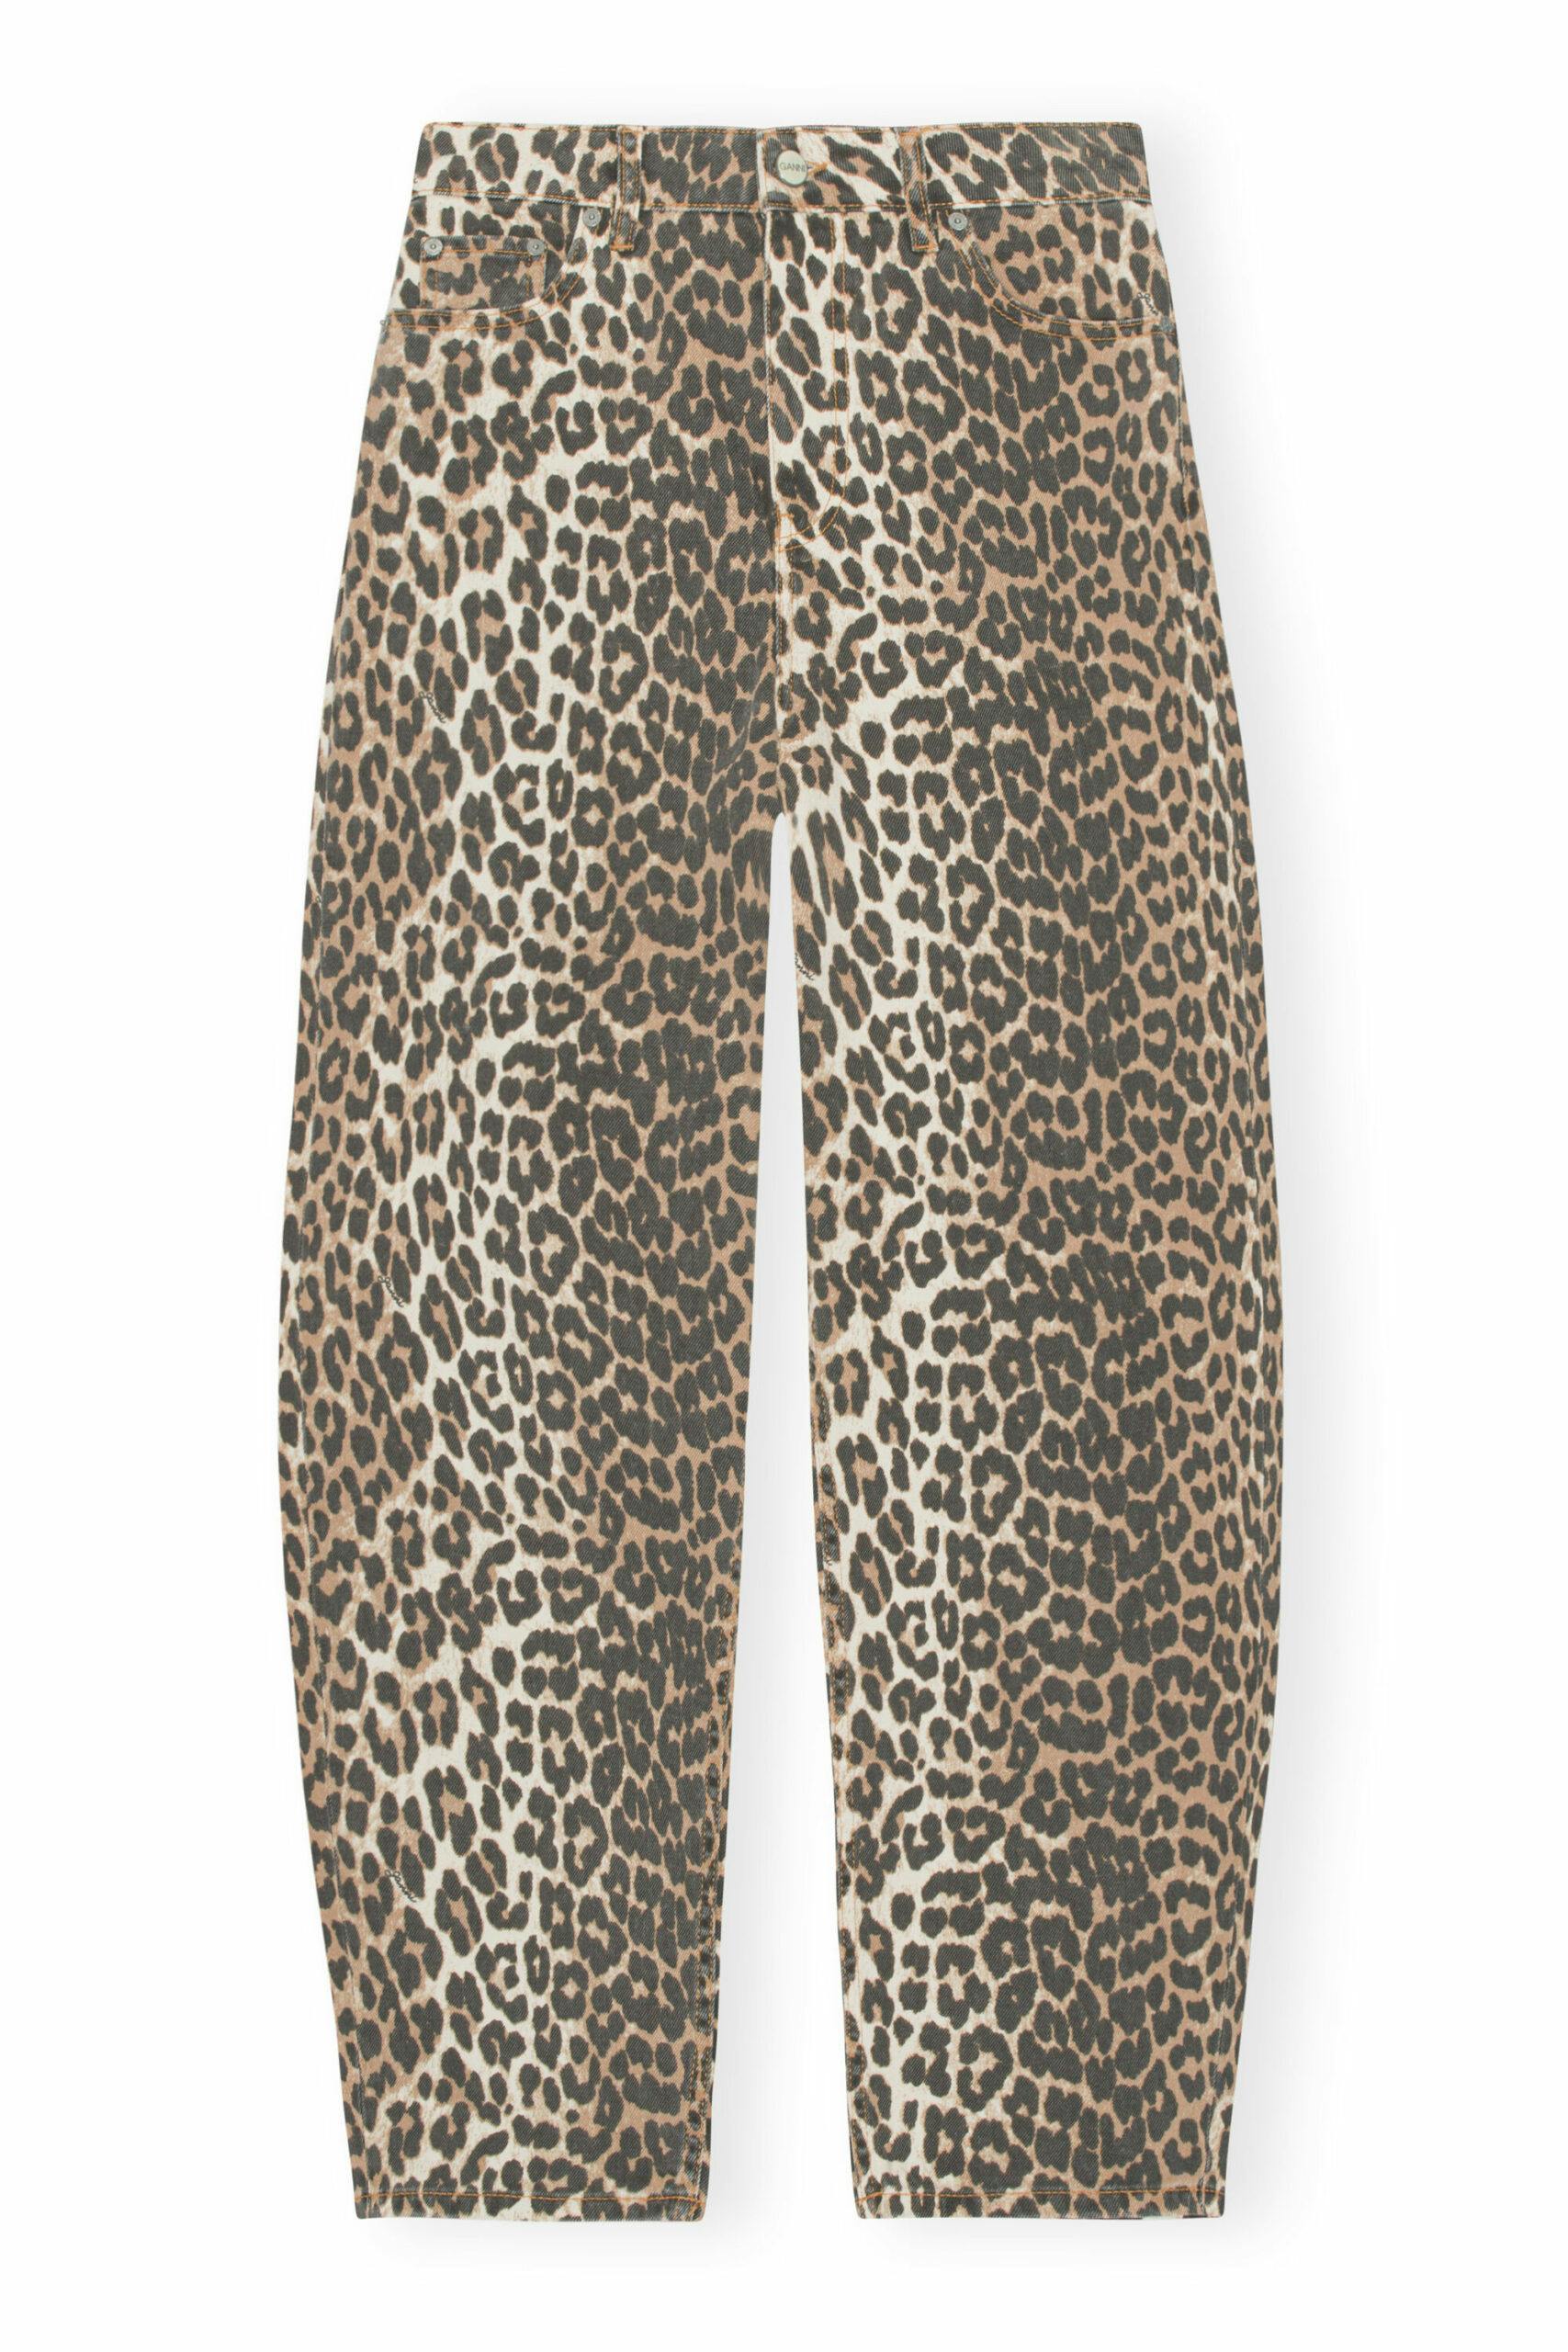 Leopard printed denim jeans by Golden Goose | Tessabit